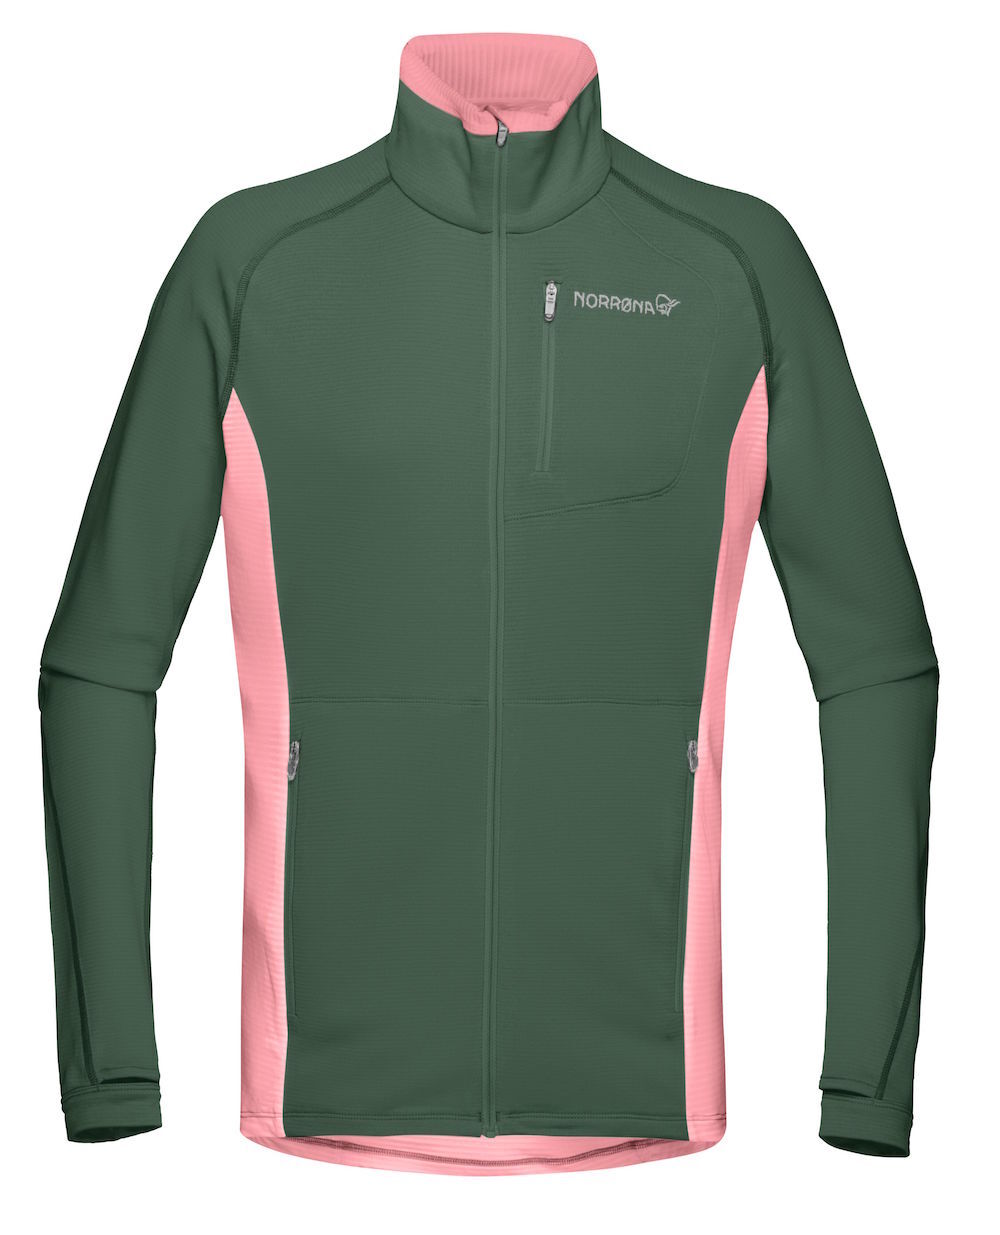 Norrøna Bitihorn Warm1 Stretch Jacket - Fleece jacket - Women's